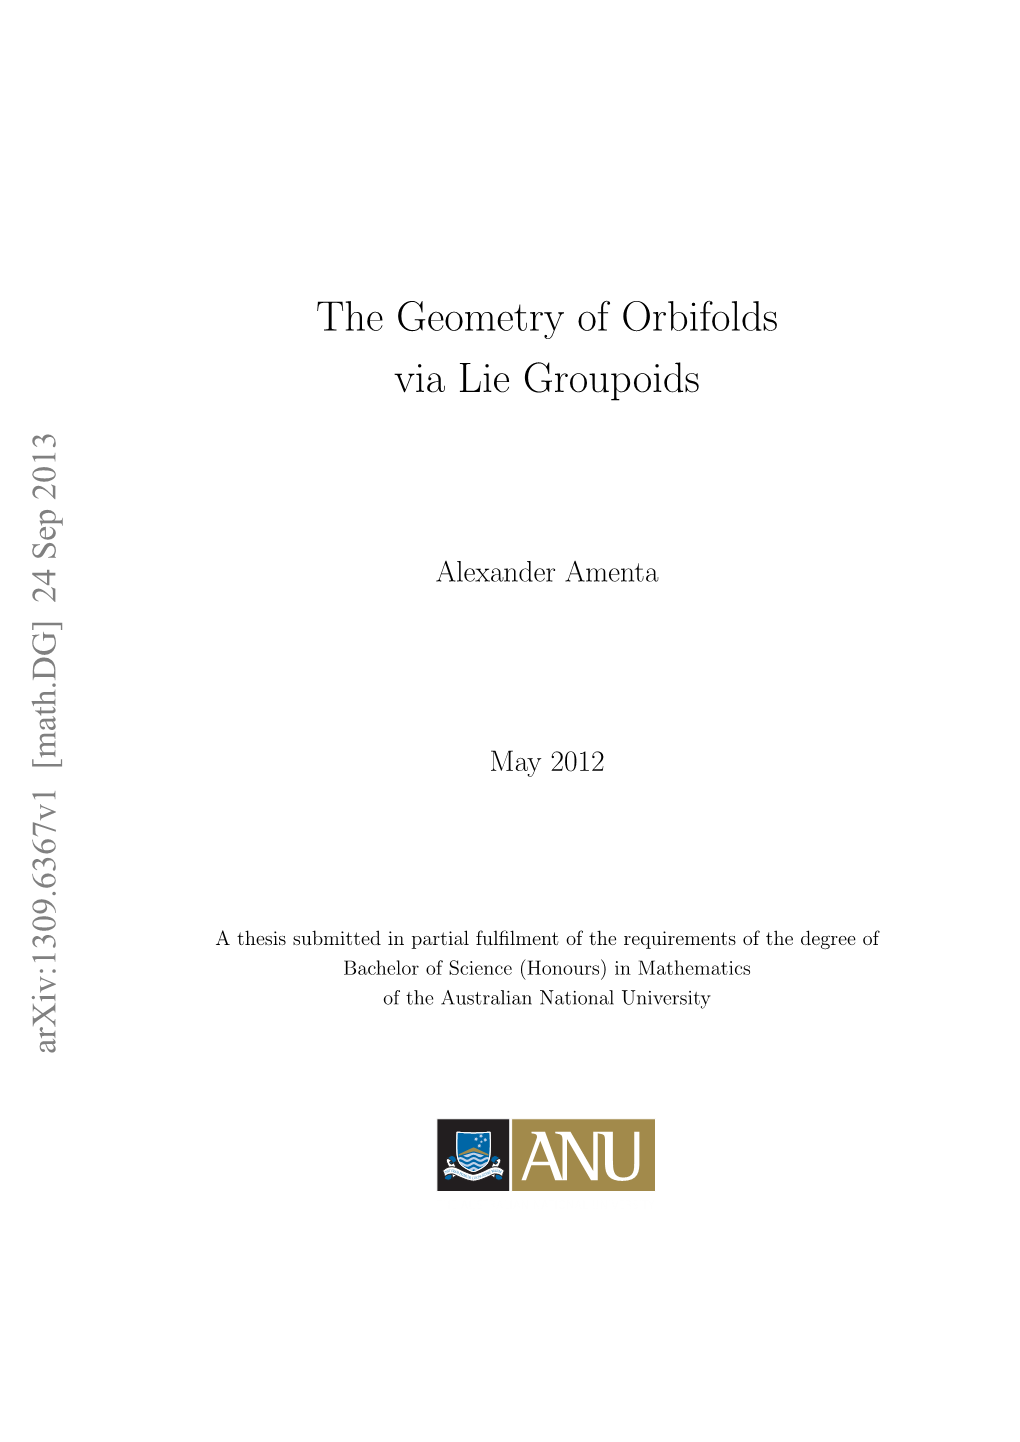 The Geometry of Orbifolds Via Lie Groupoids